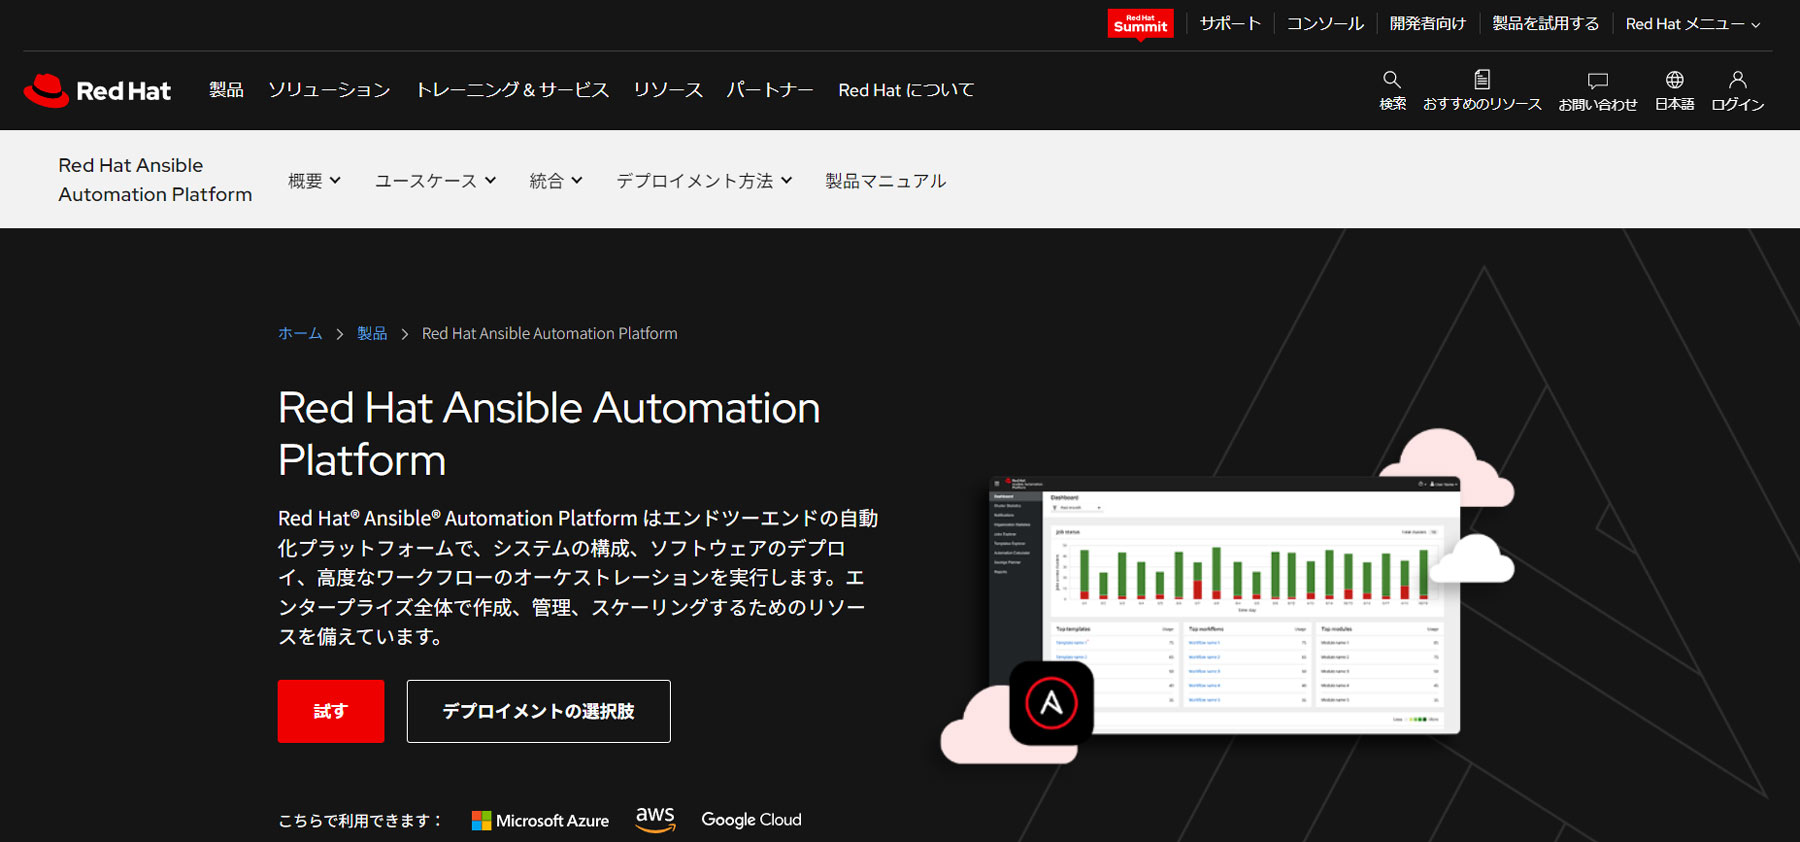 Red Hat Ansible Automation Platform公式Webサイト